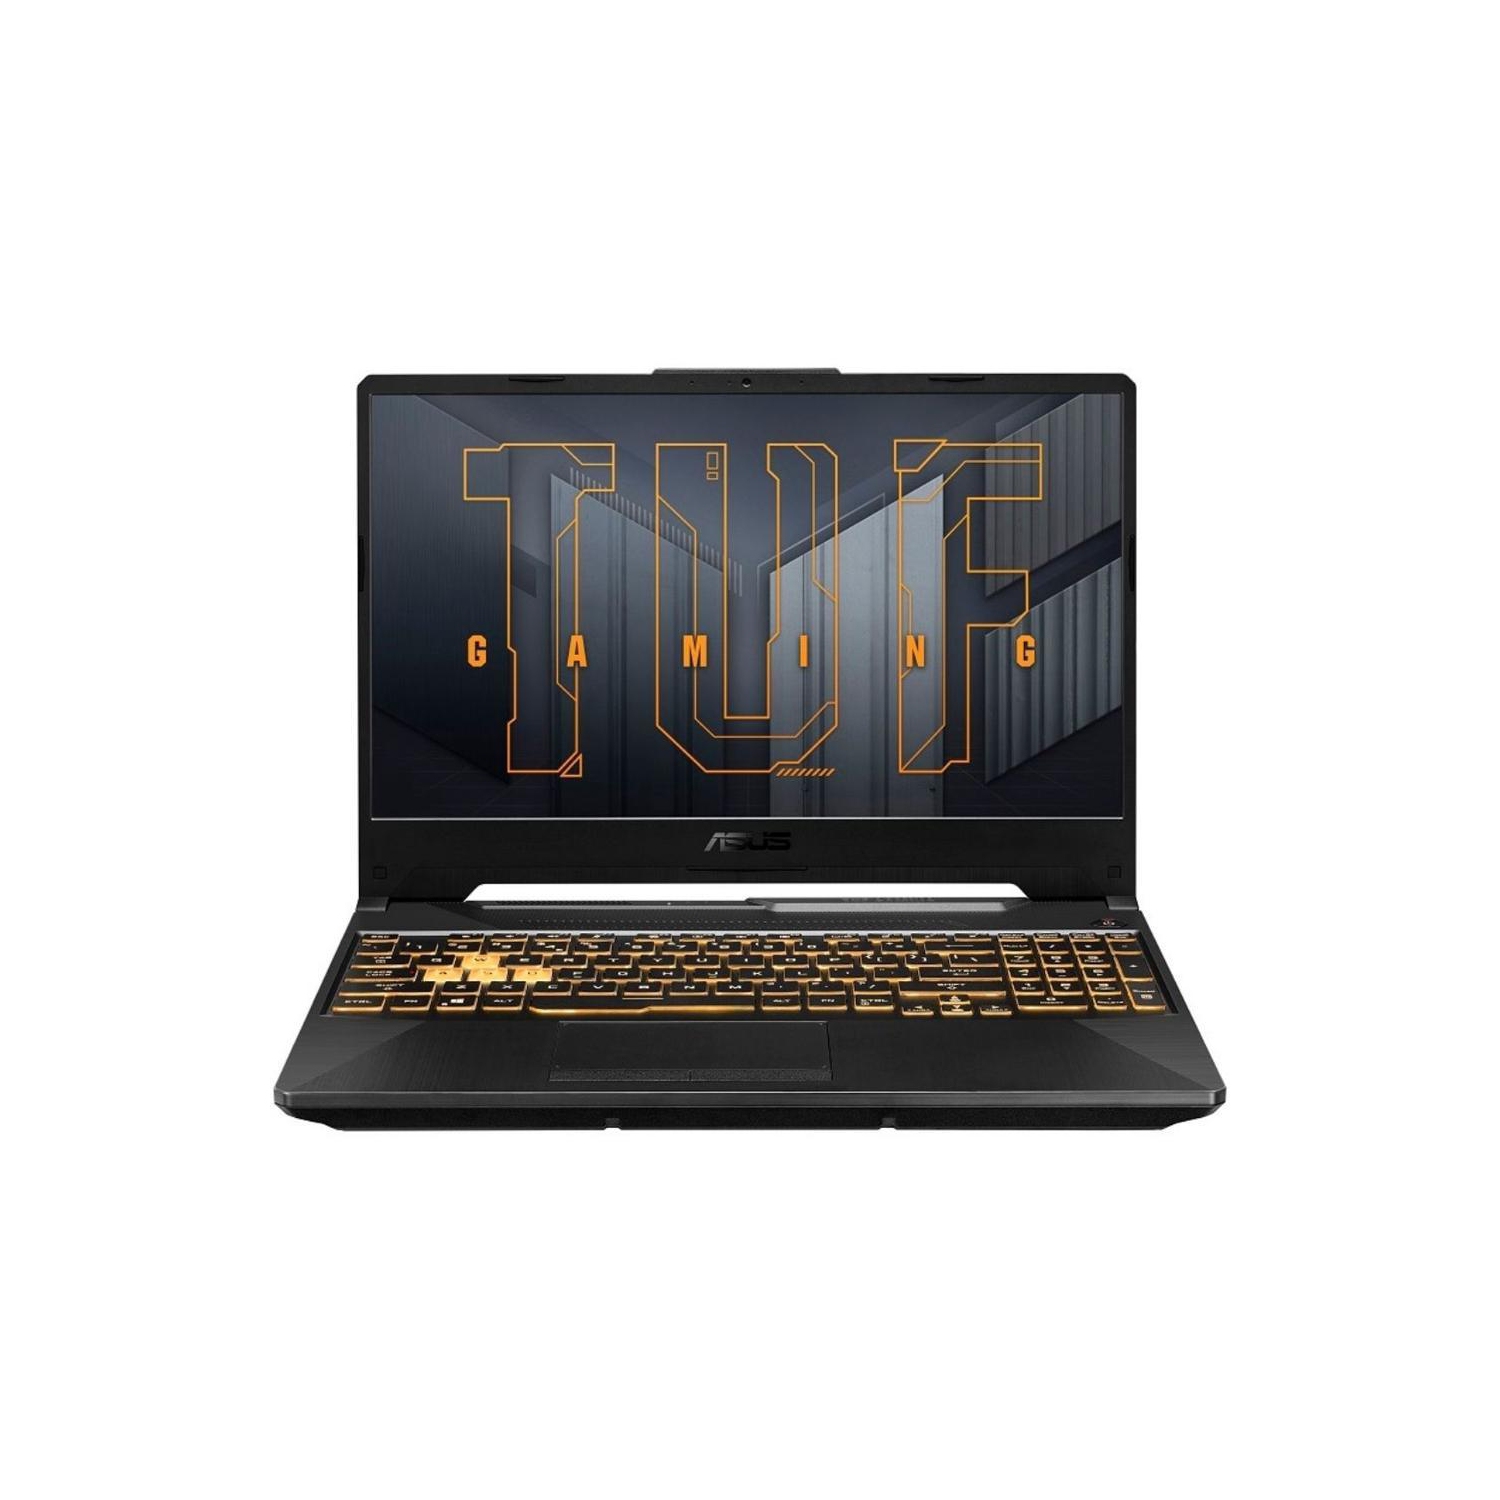 Custom ASUS TUF Gaming F15 Laptop (Intel i7-11800H, 64GB RAM, 1TB PCIe SSD, NVIDIA RTX 3060 Max-P, Win 10 Home)